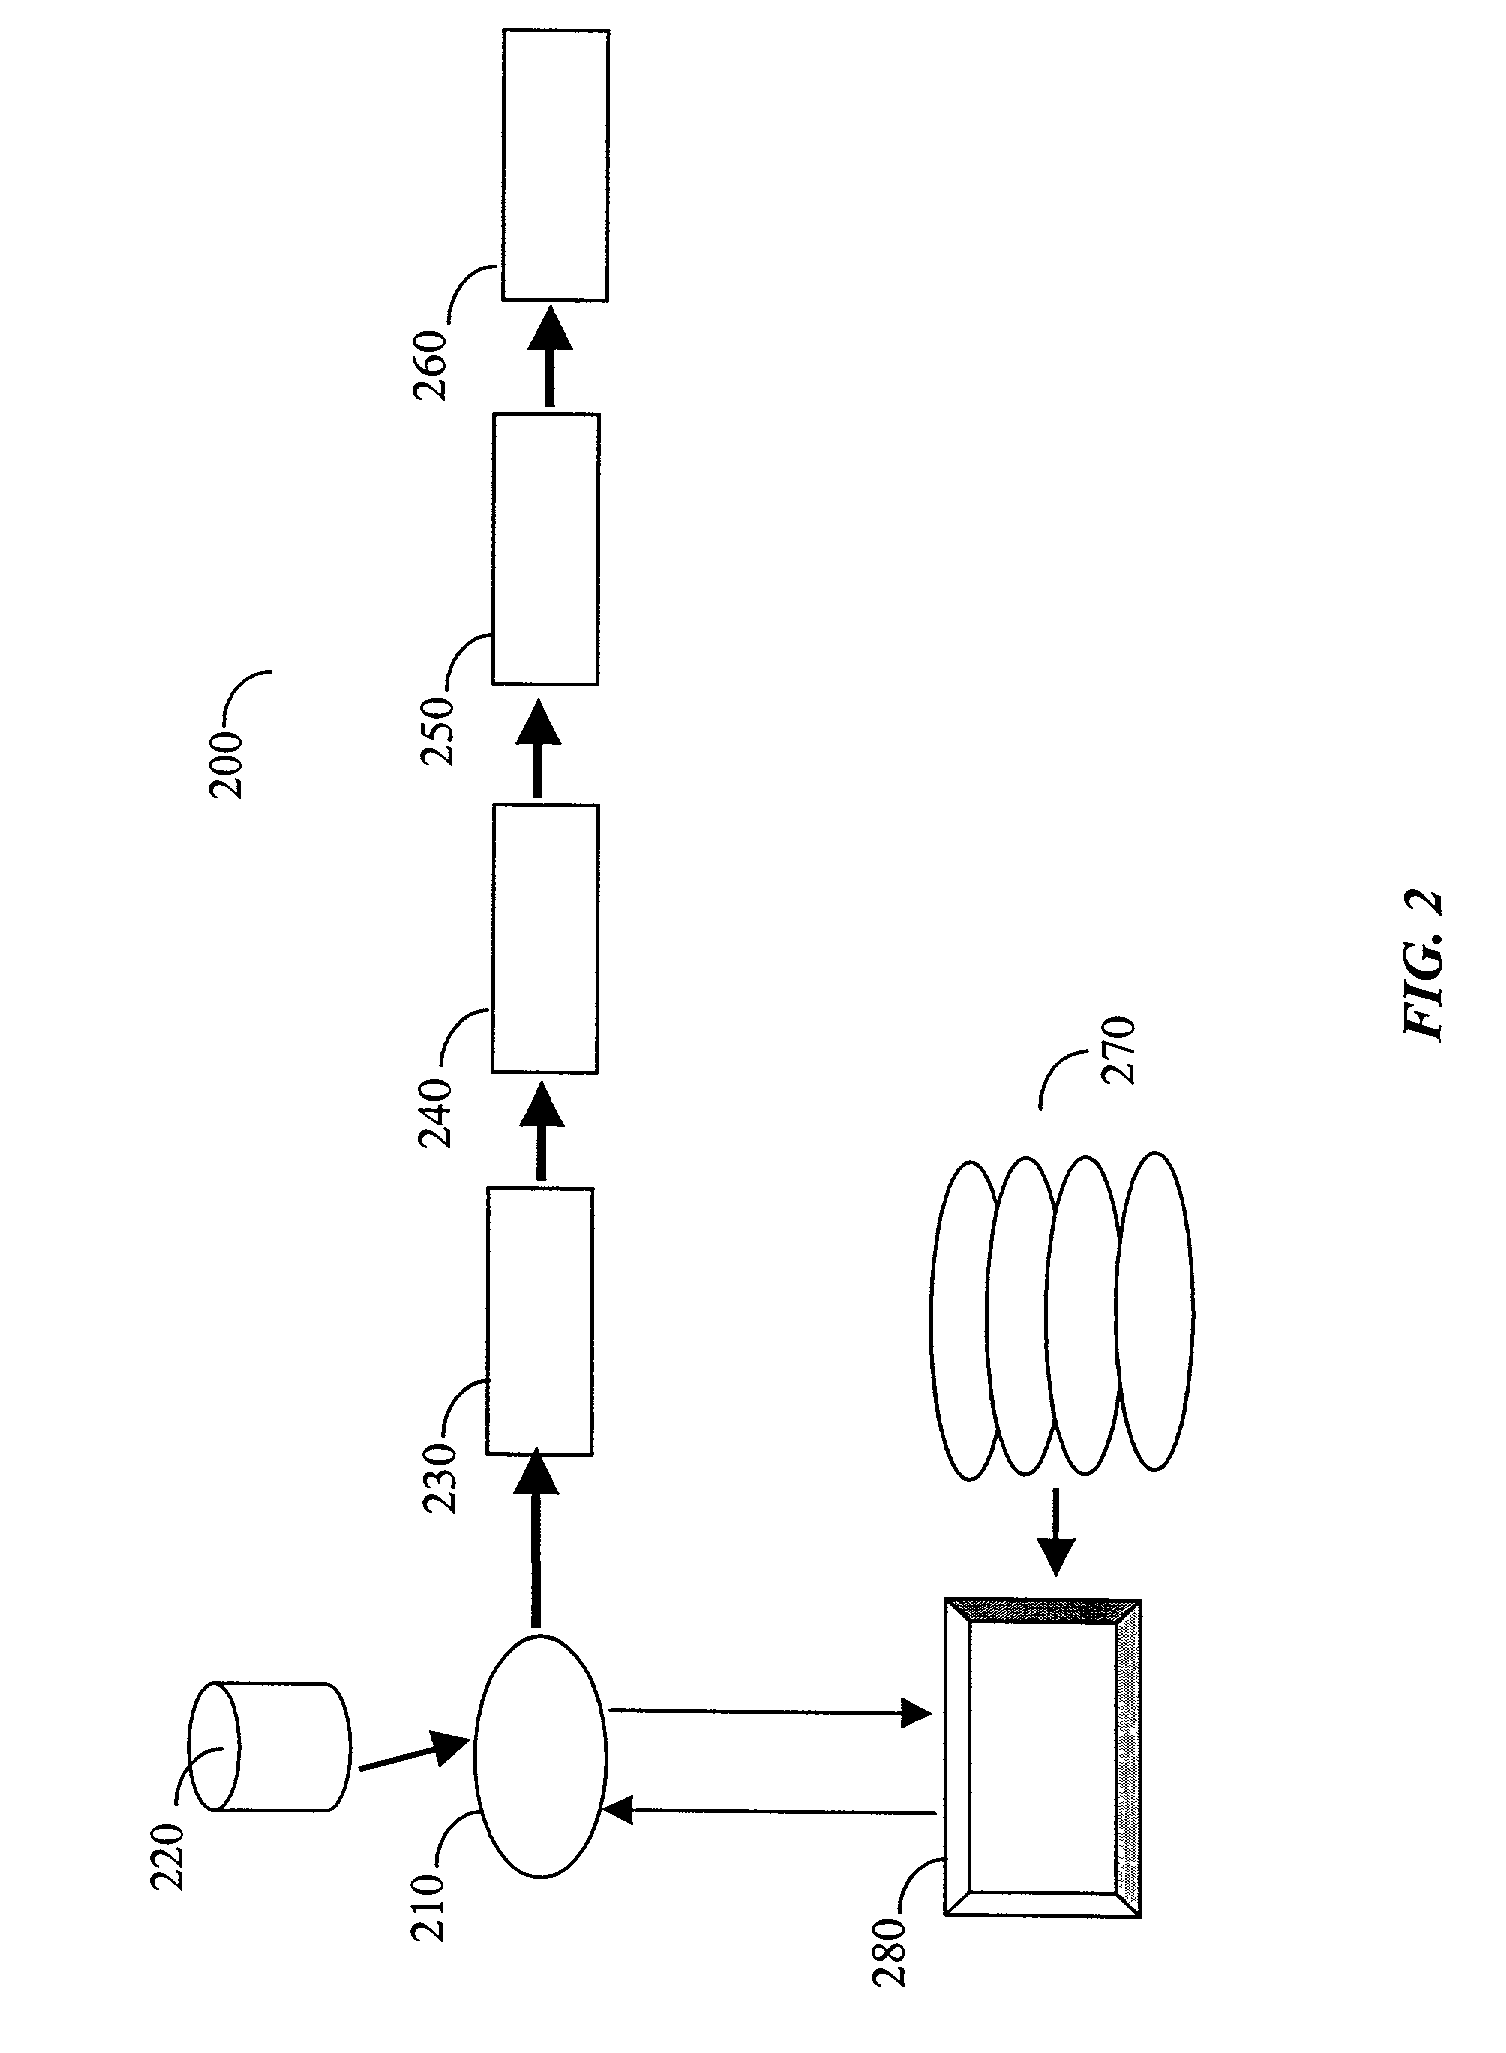 Apparatus and method for handling of multi-level circuit design data